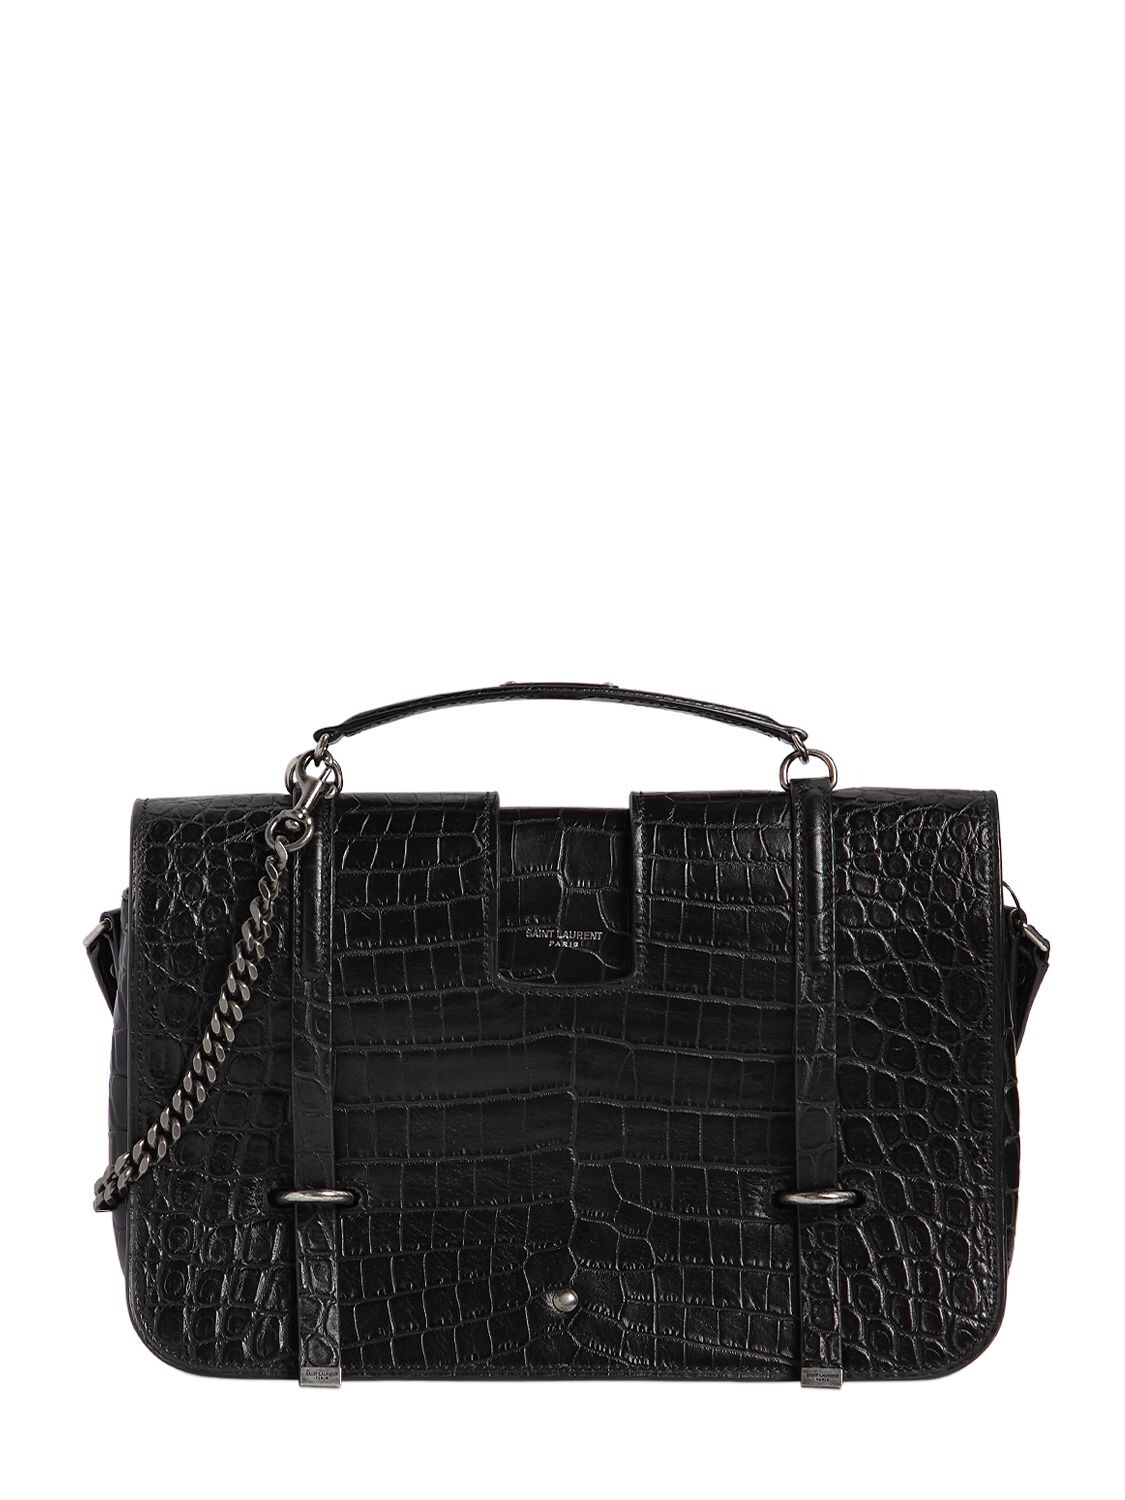 Saint Laurent Medium Charlotte Embossed Leather Bag In Black